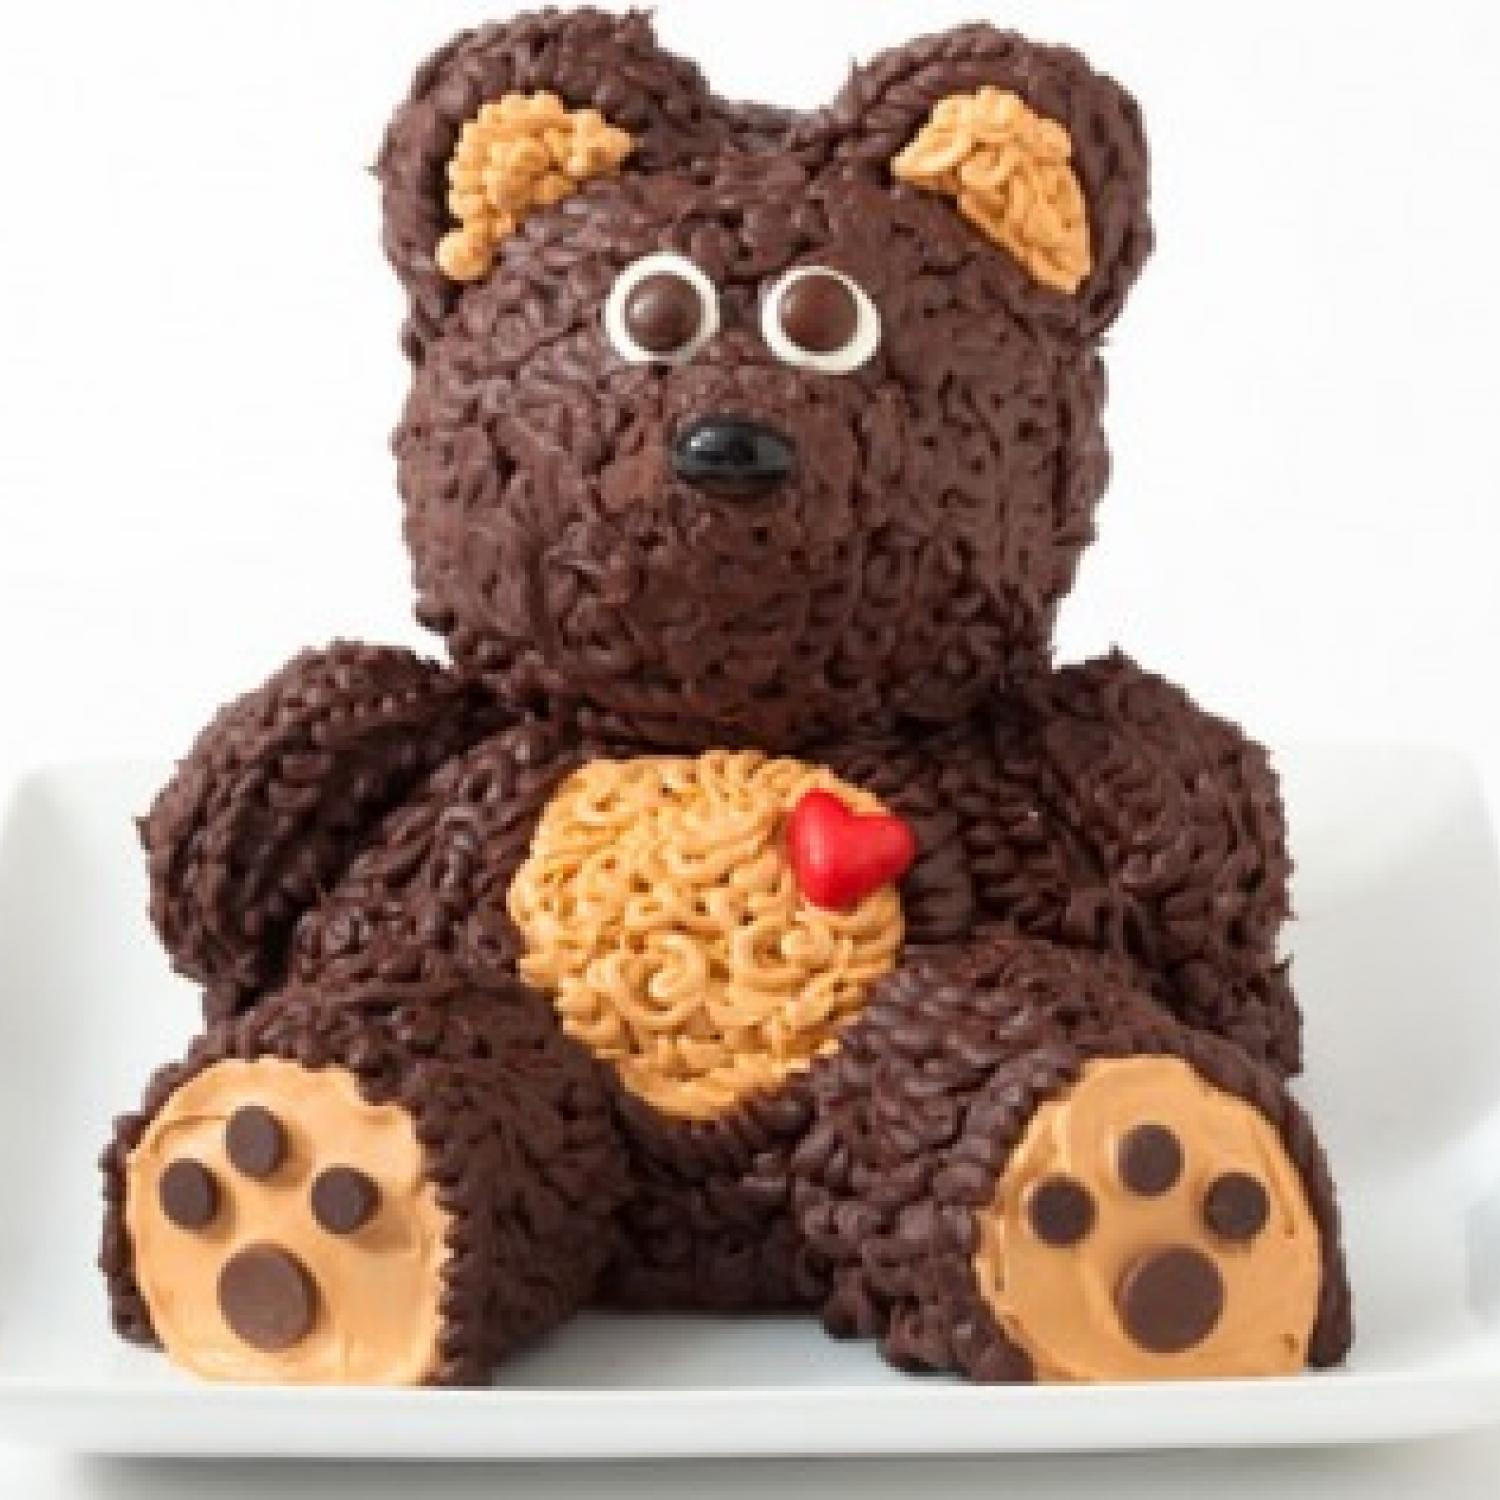 Bear Birthday Cake
 Teddy Bear Birthday Cake Design